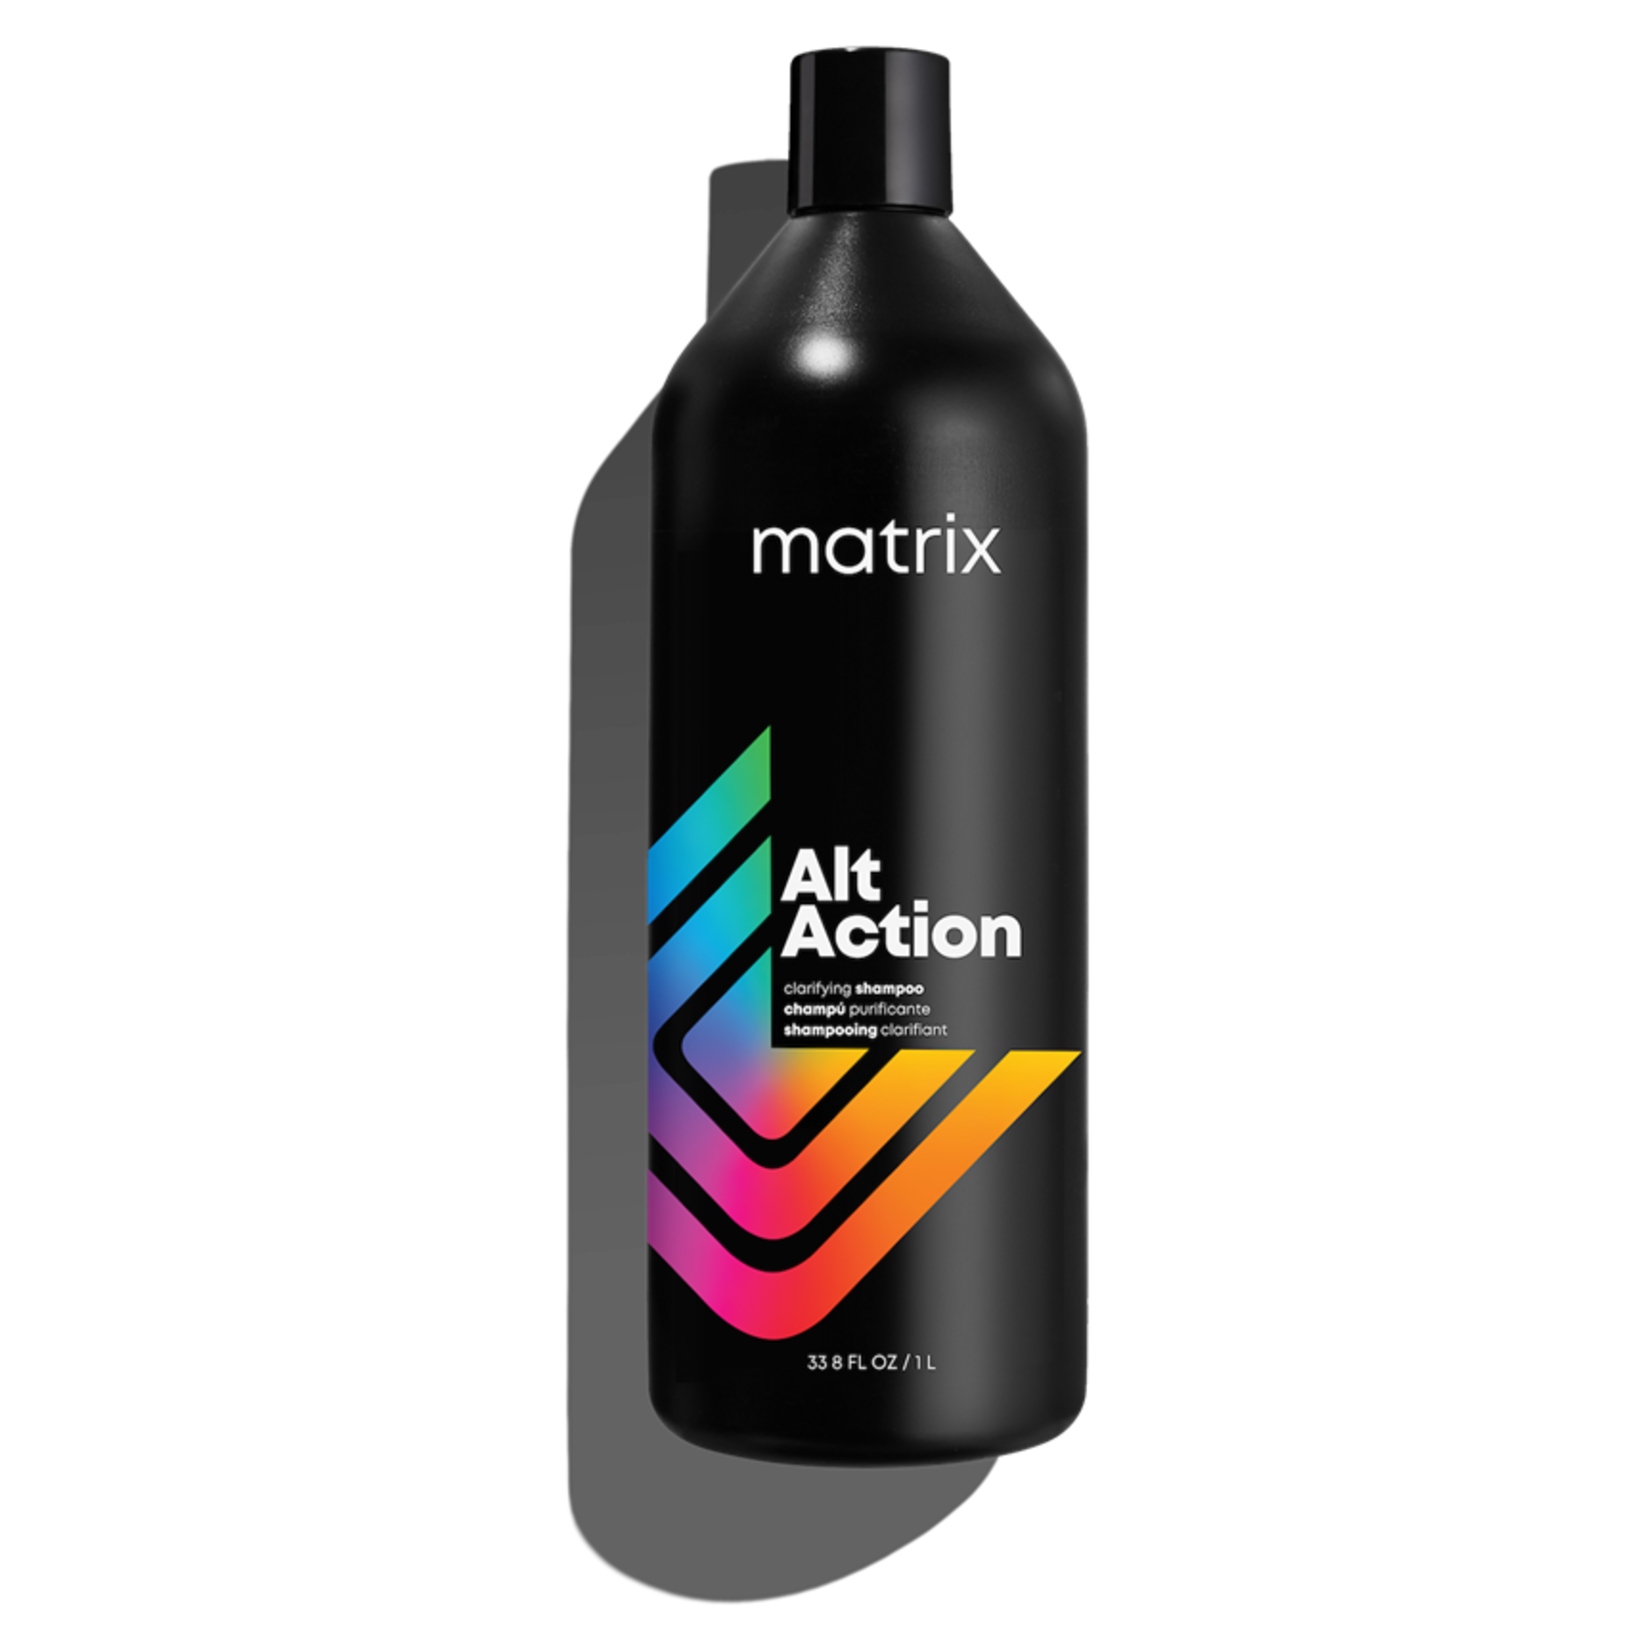 Matrix Matrix - Pro solutionis alternate action - Clarifying shampoo 1 Liter